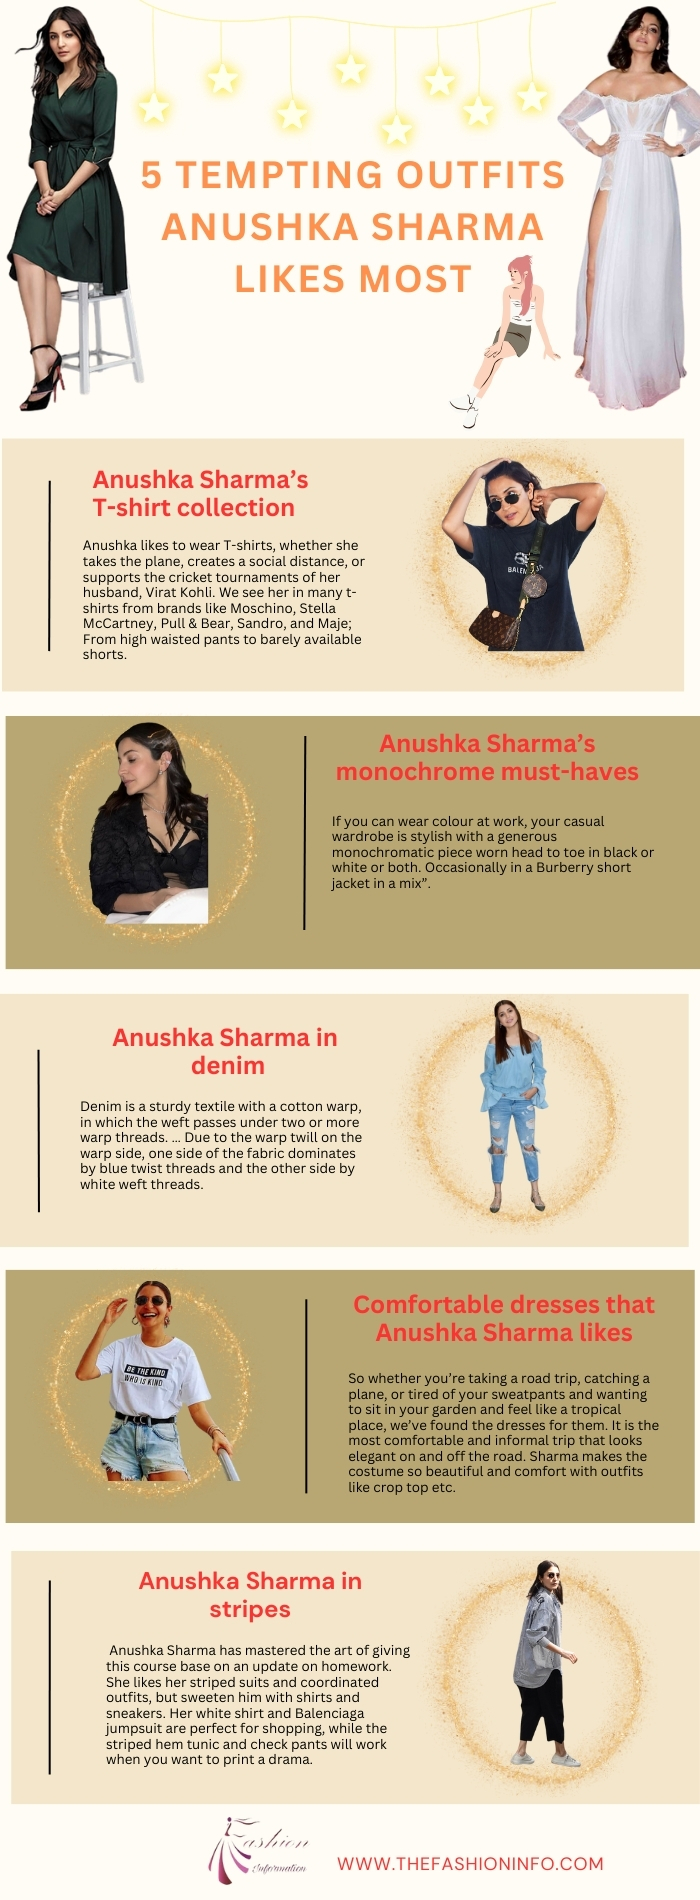 5 Tempting Outfits Anushka Sharma Likes Most